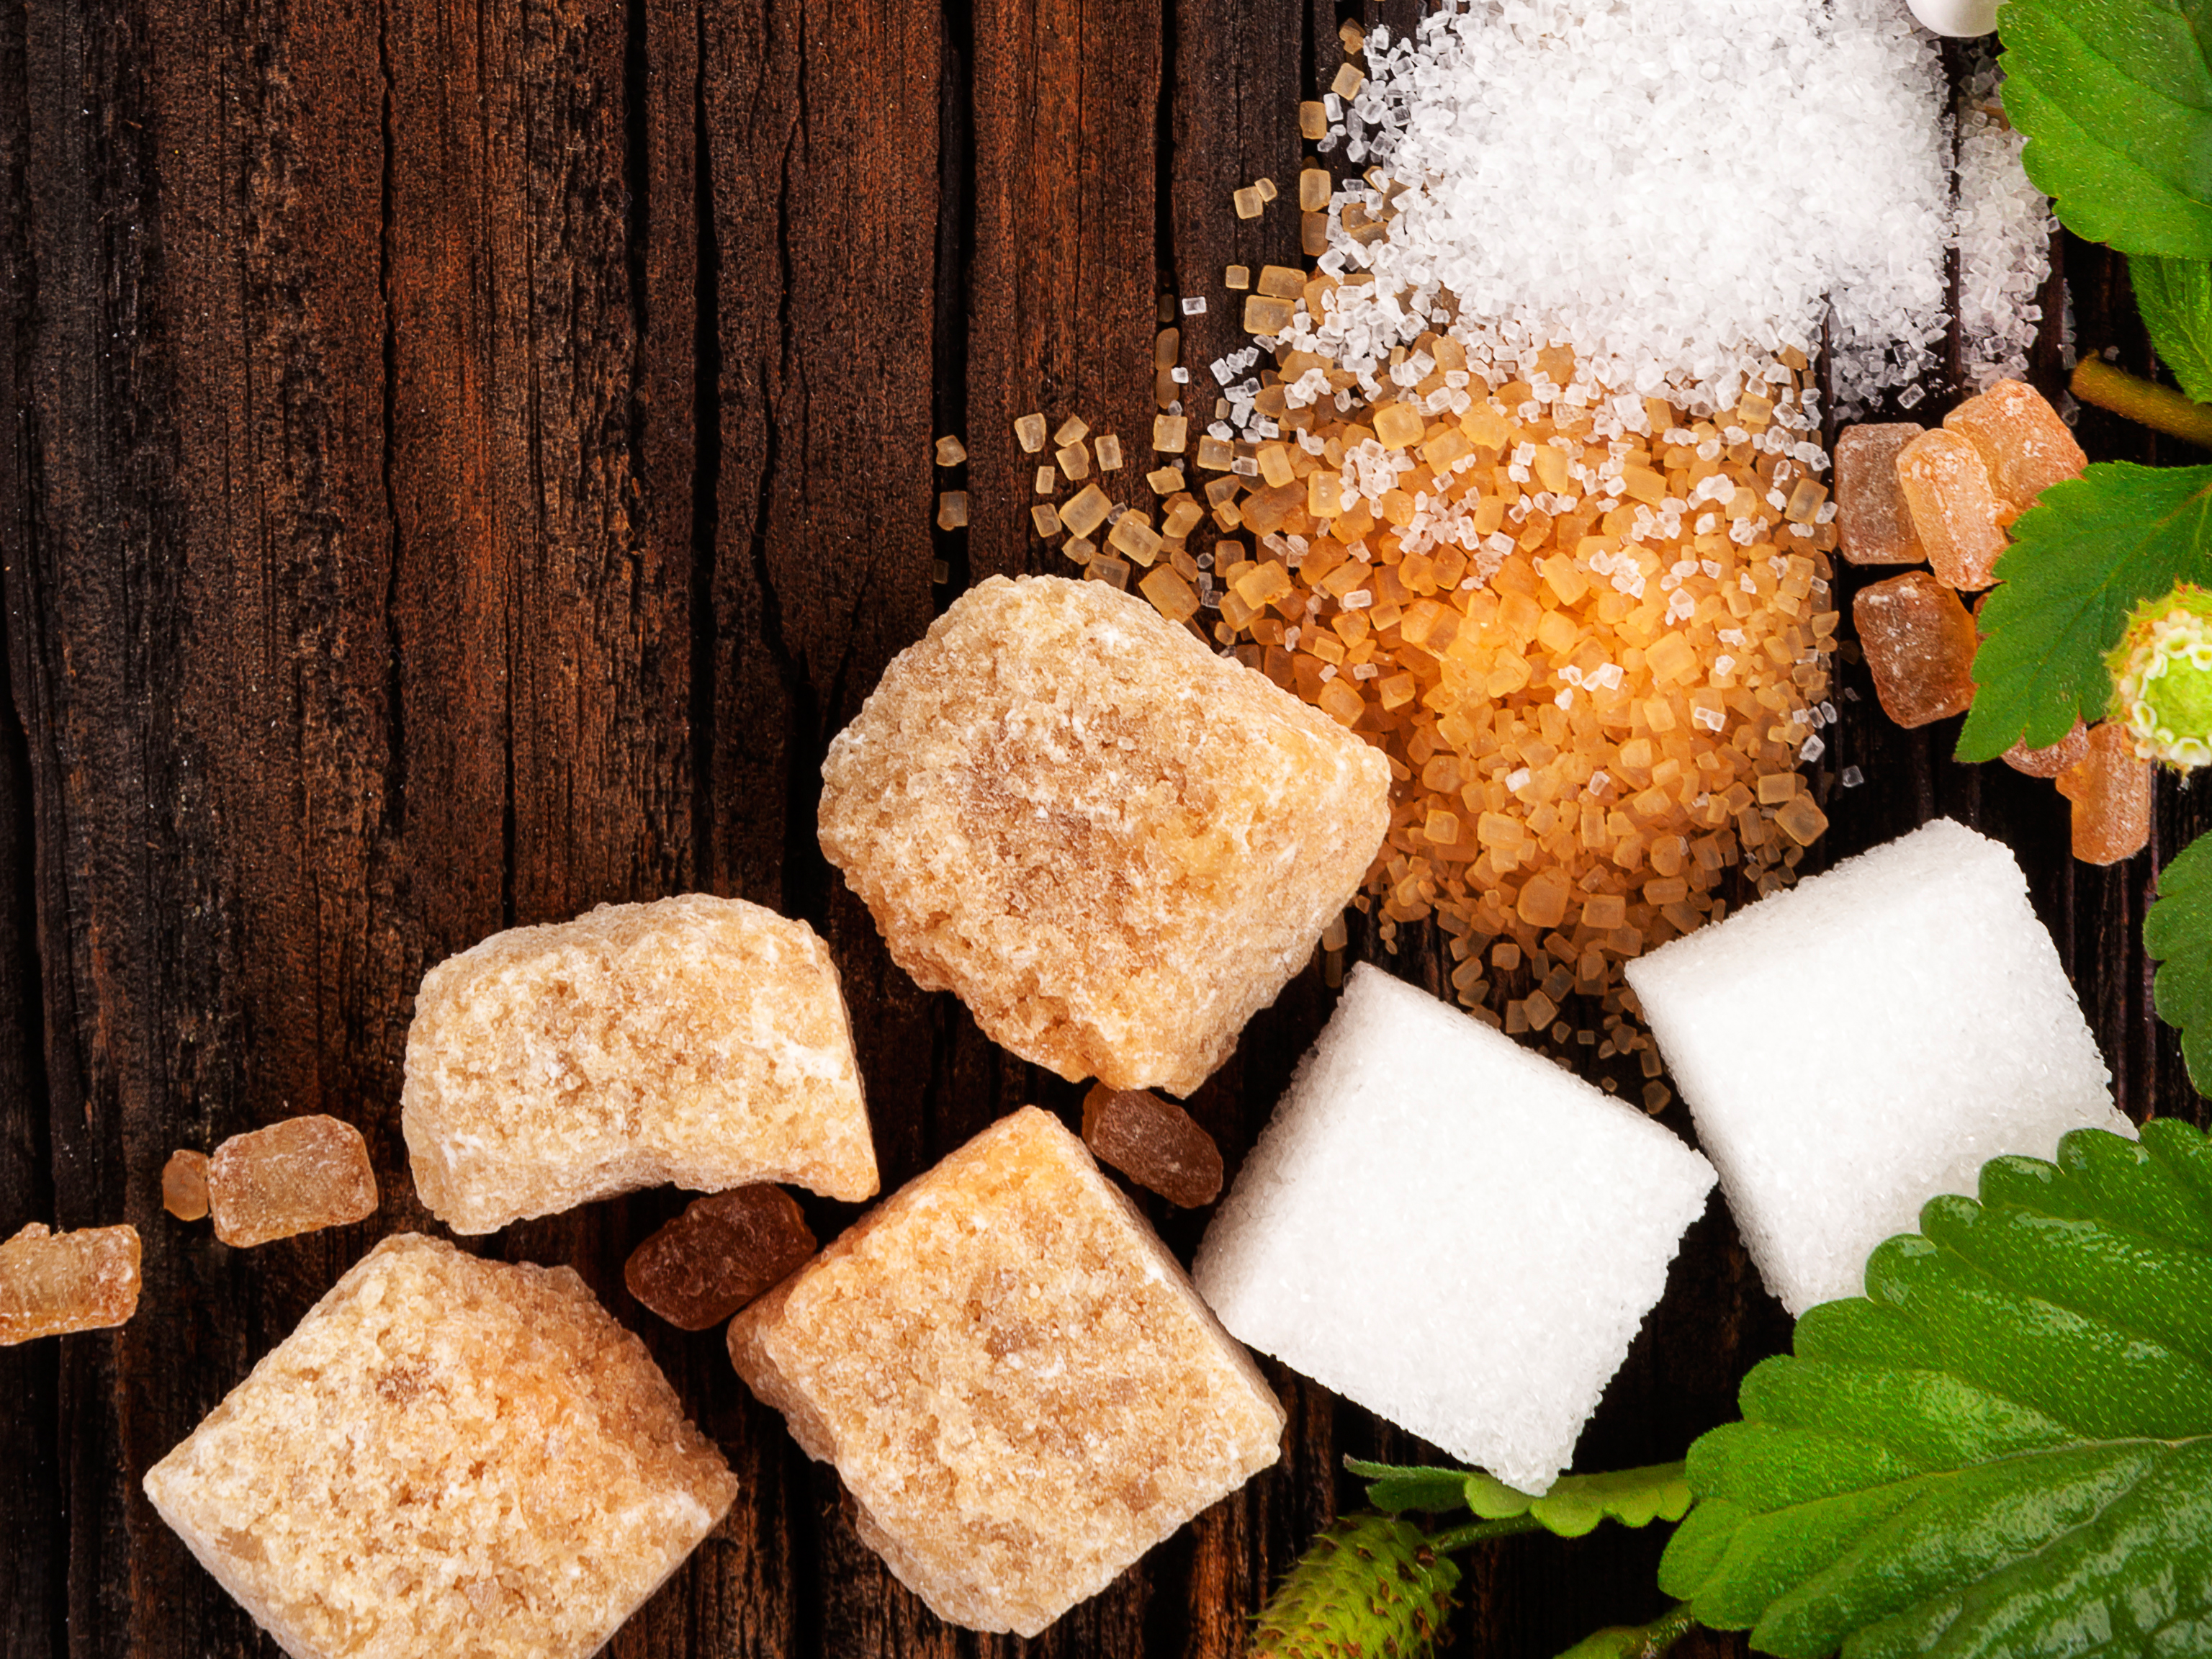 Best sweeteners to beat blood sugar spikes